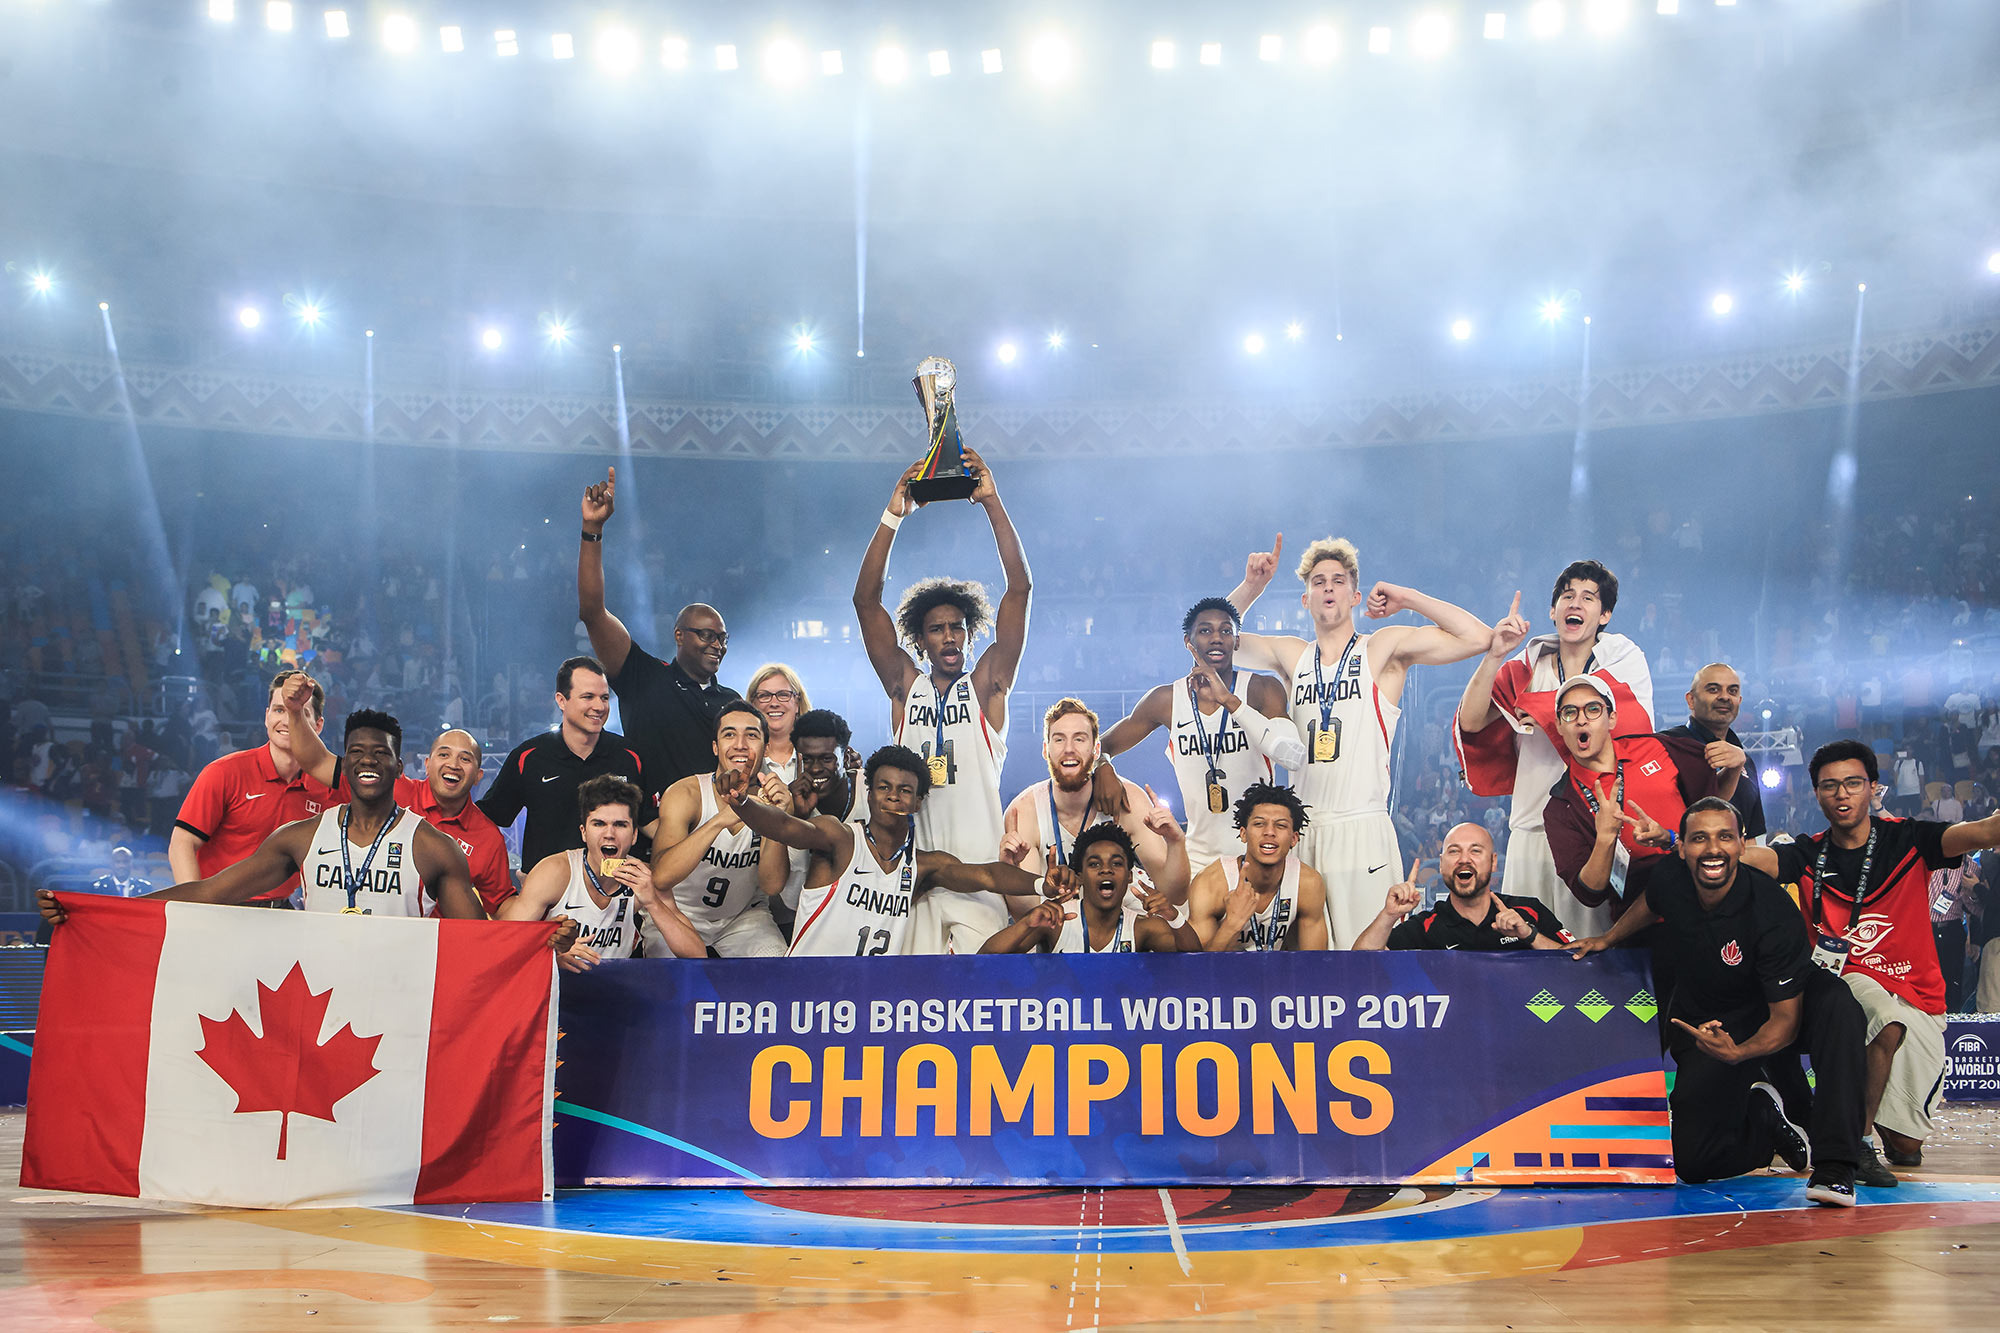 FIBA U19 Basketball World Cup